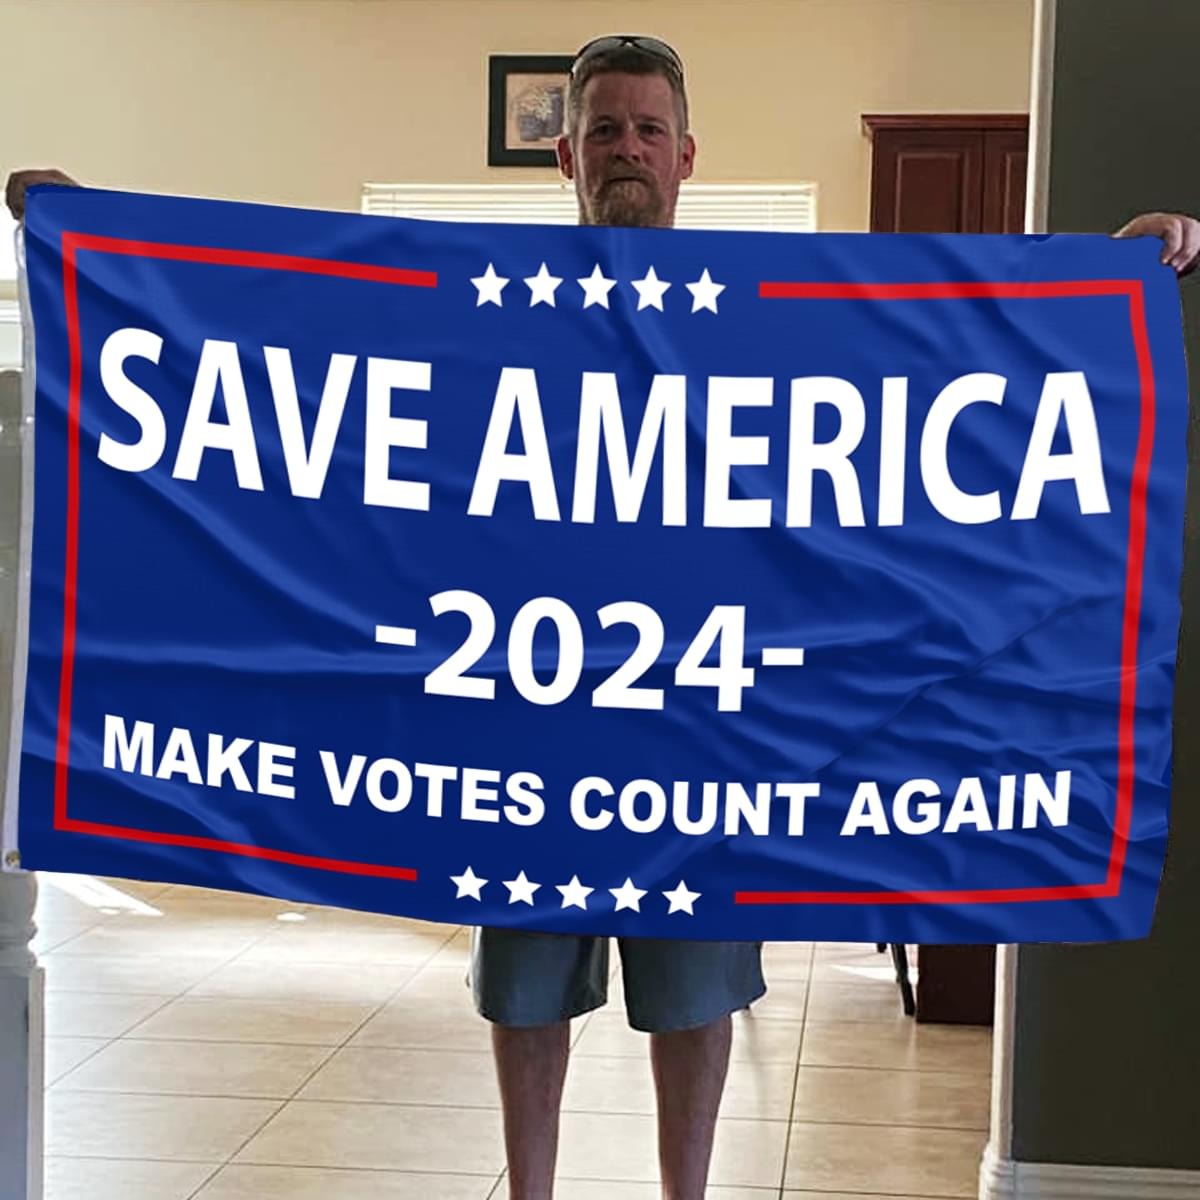 Save america 2024 make votes count again